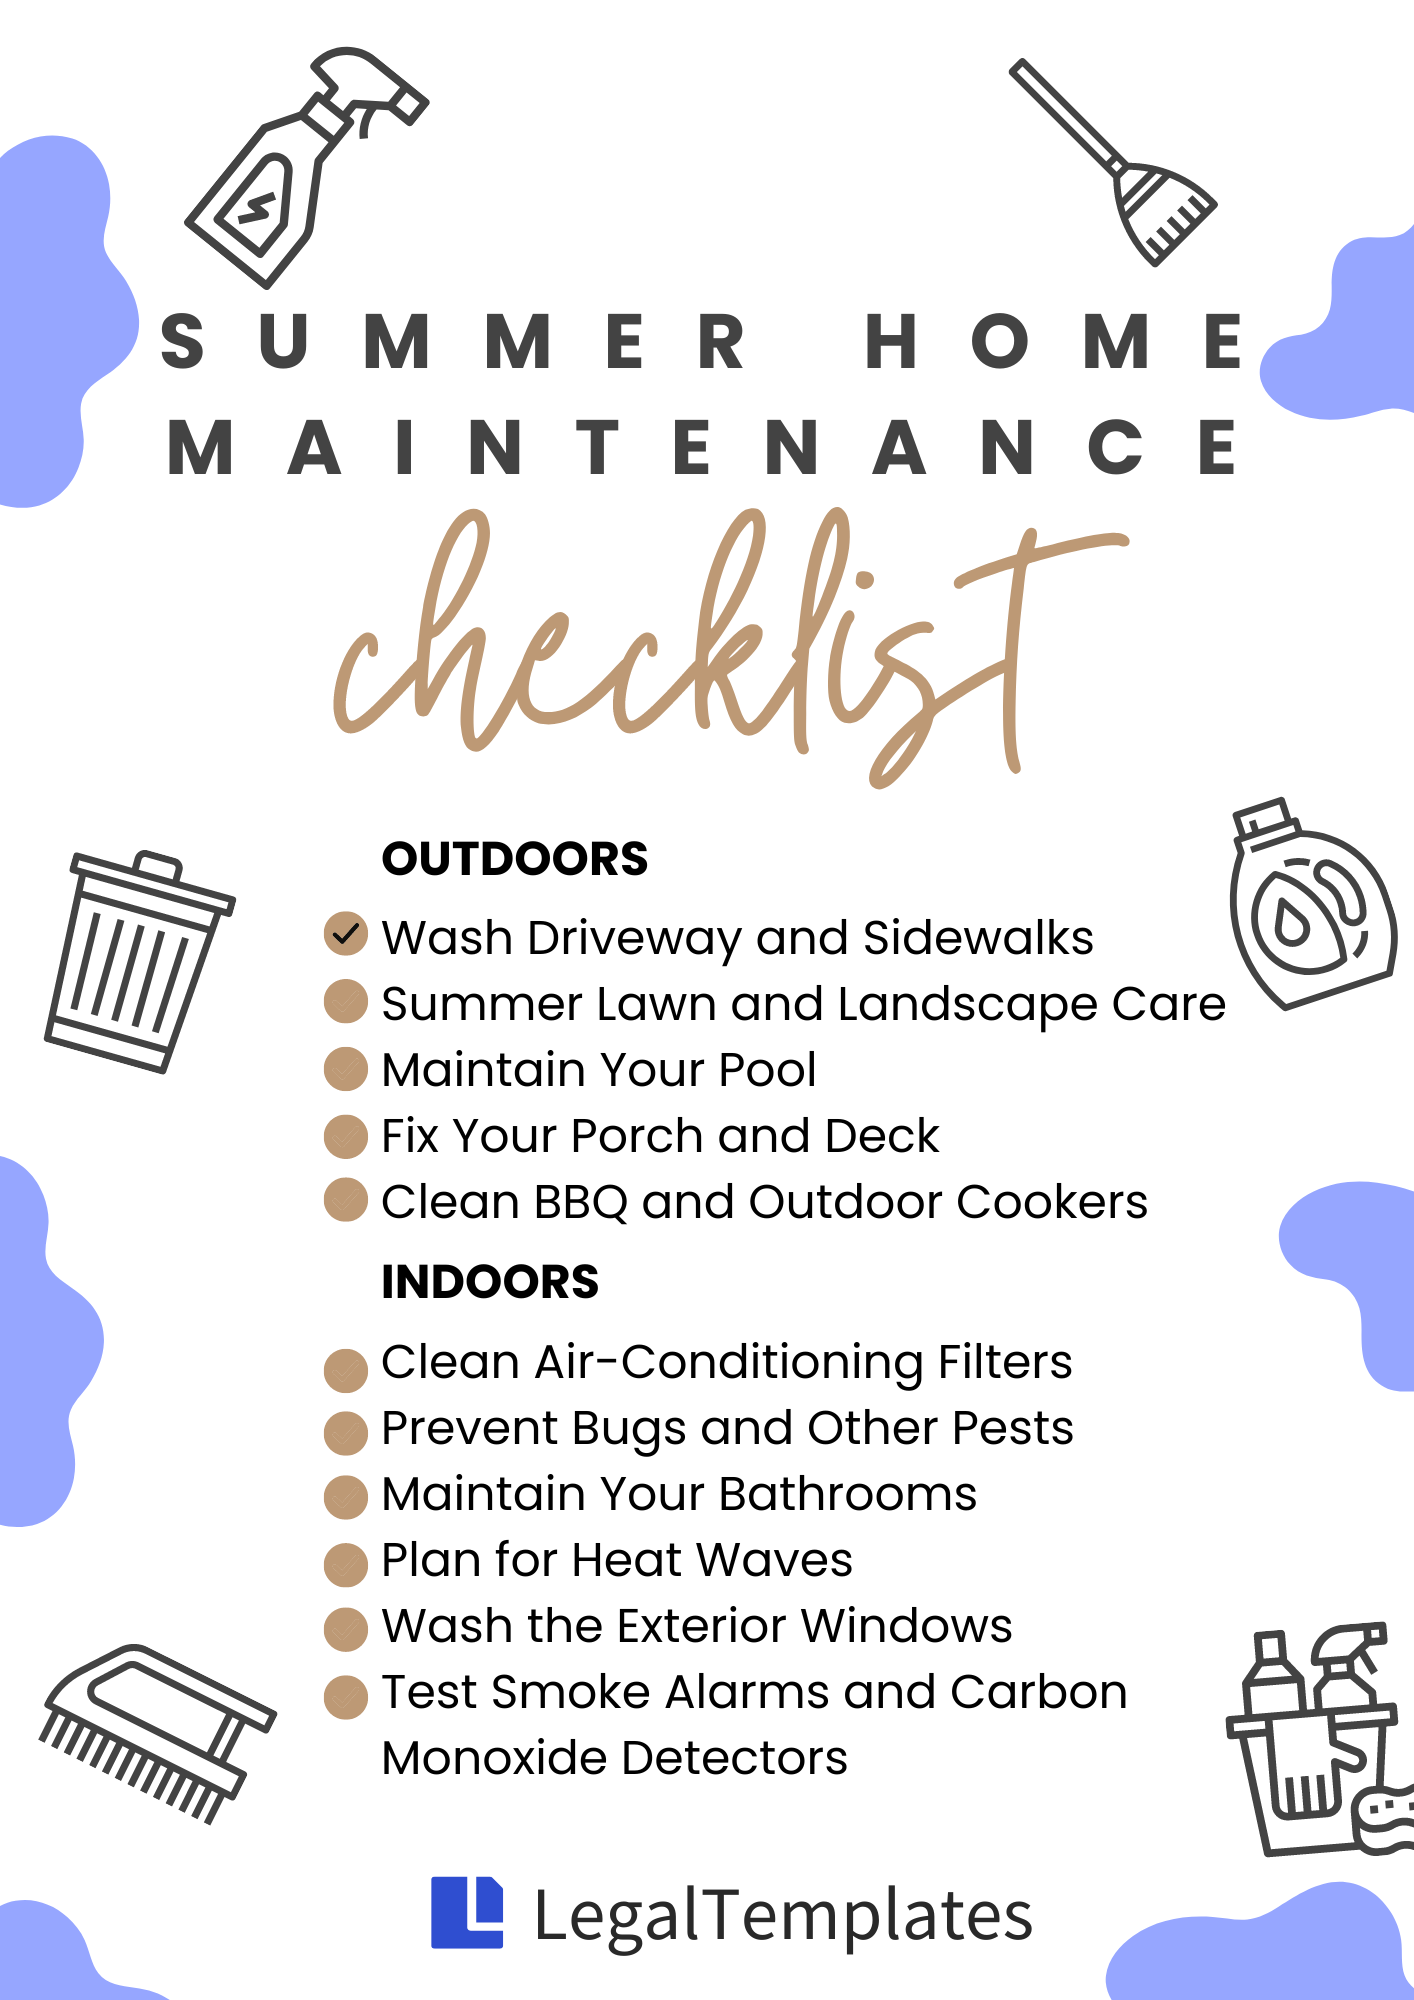 infographic of summer home maintenance checklist